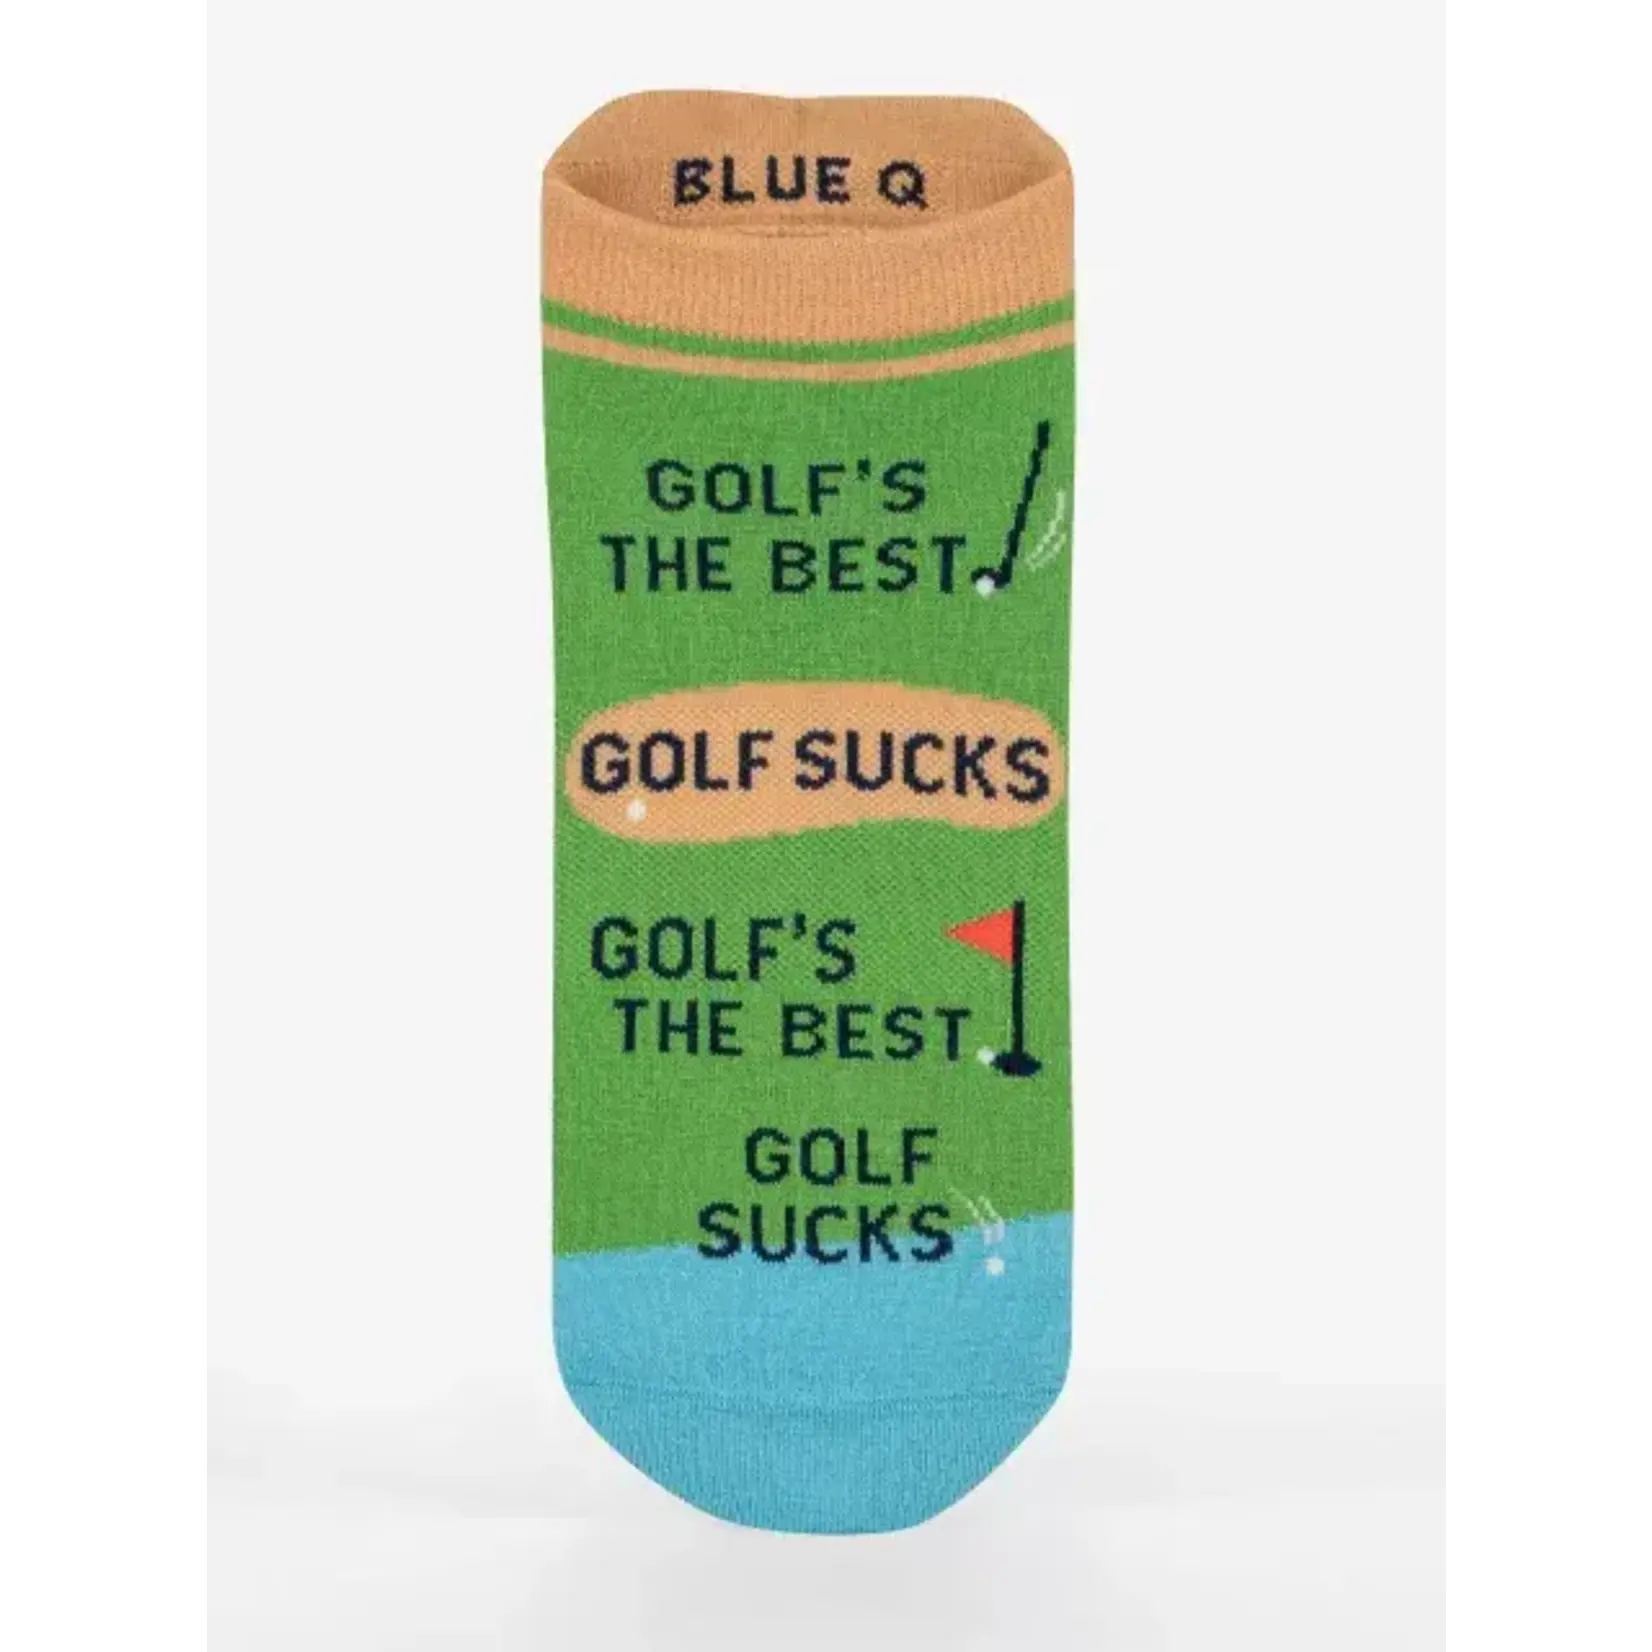 BlueQ Golf Sucks S/M Sneaker Socks